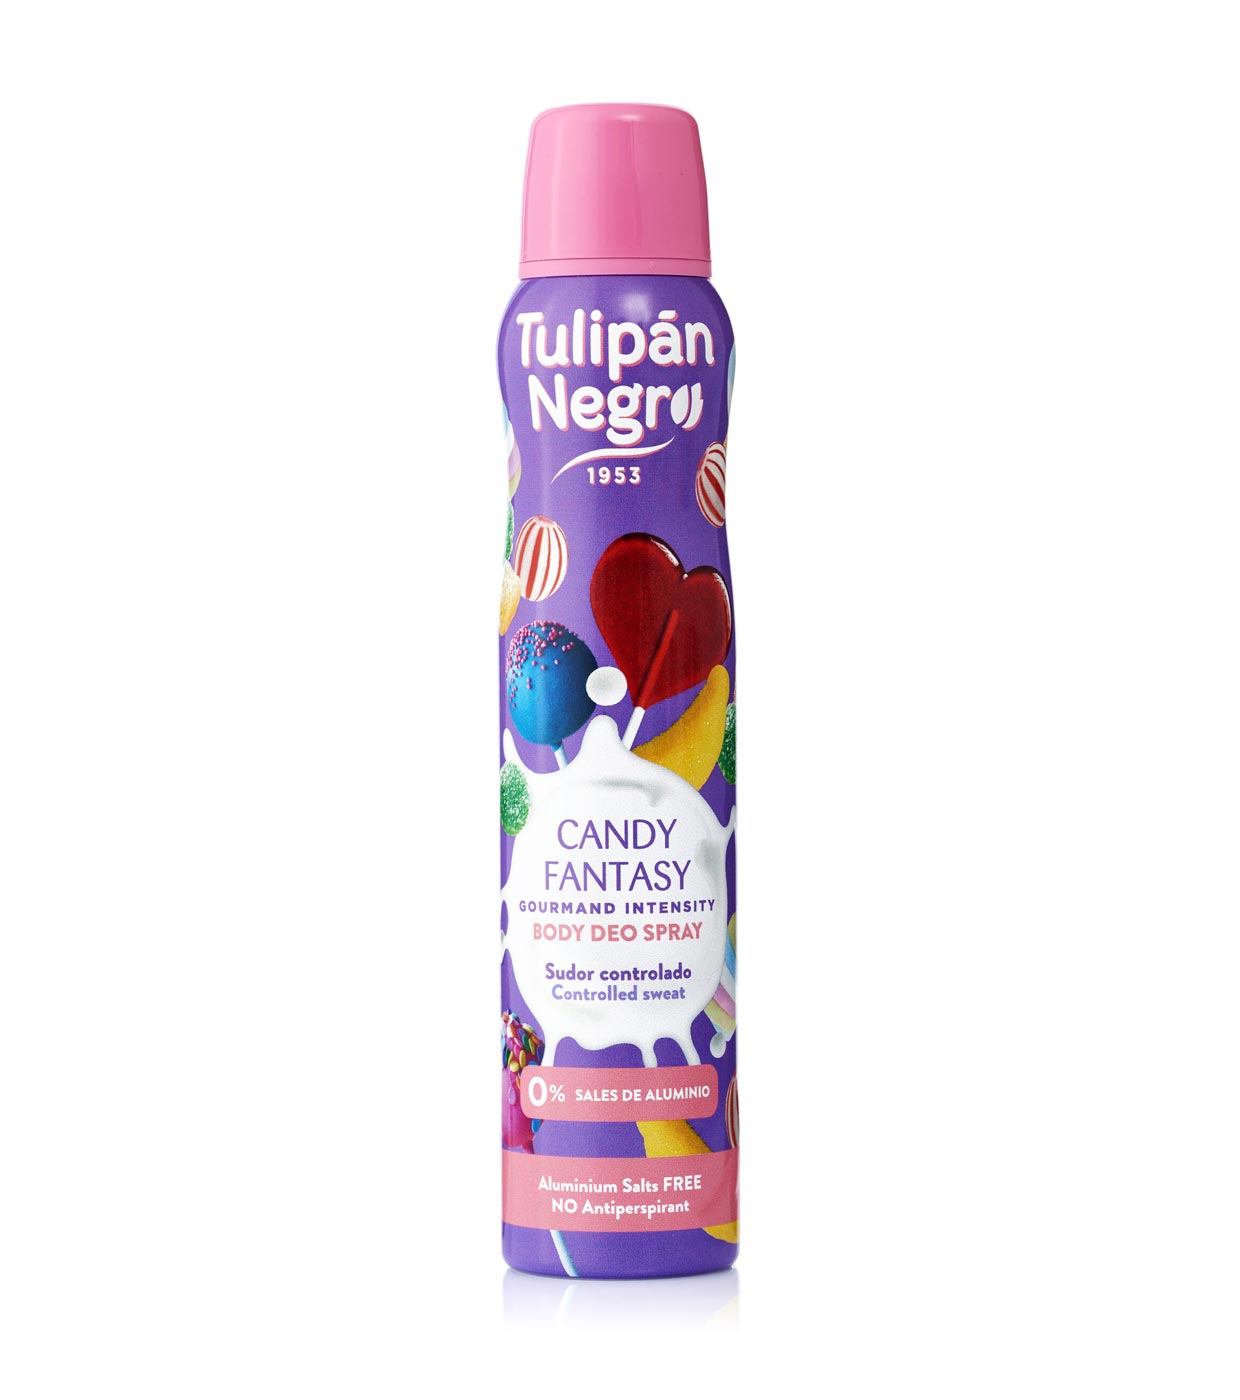 Tulipan Negro Candy Fantasy - Set (eau de toilette/50ml + spray